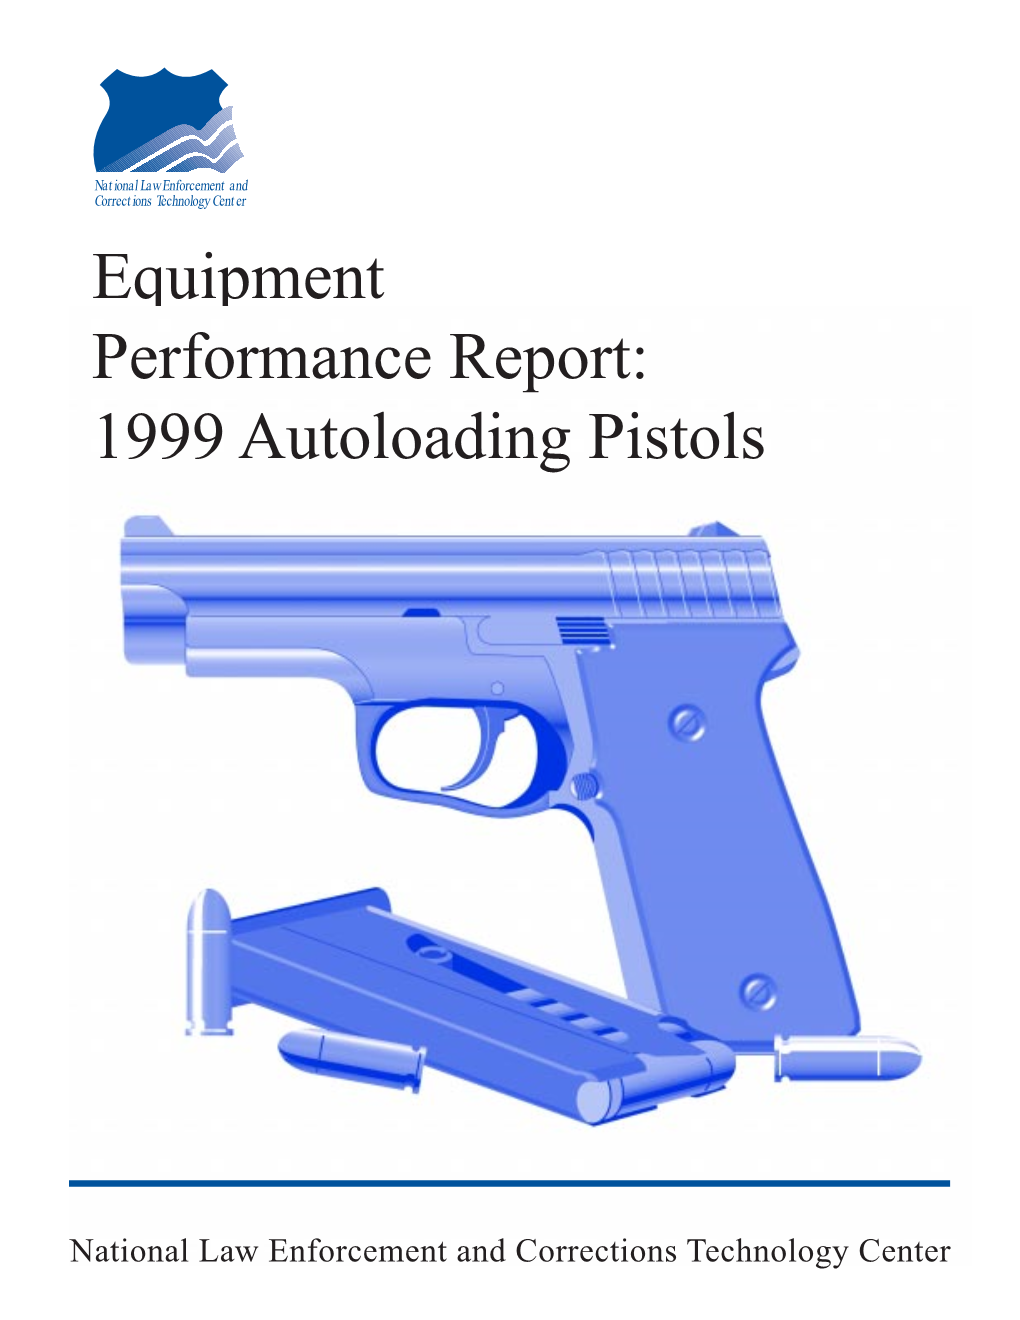 Equipment Performance Report: 1999 Autoloading Pistols